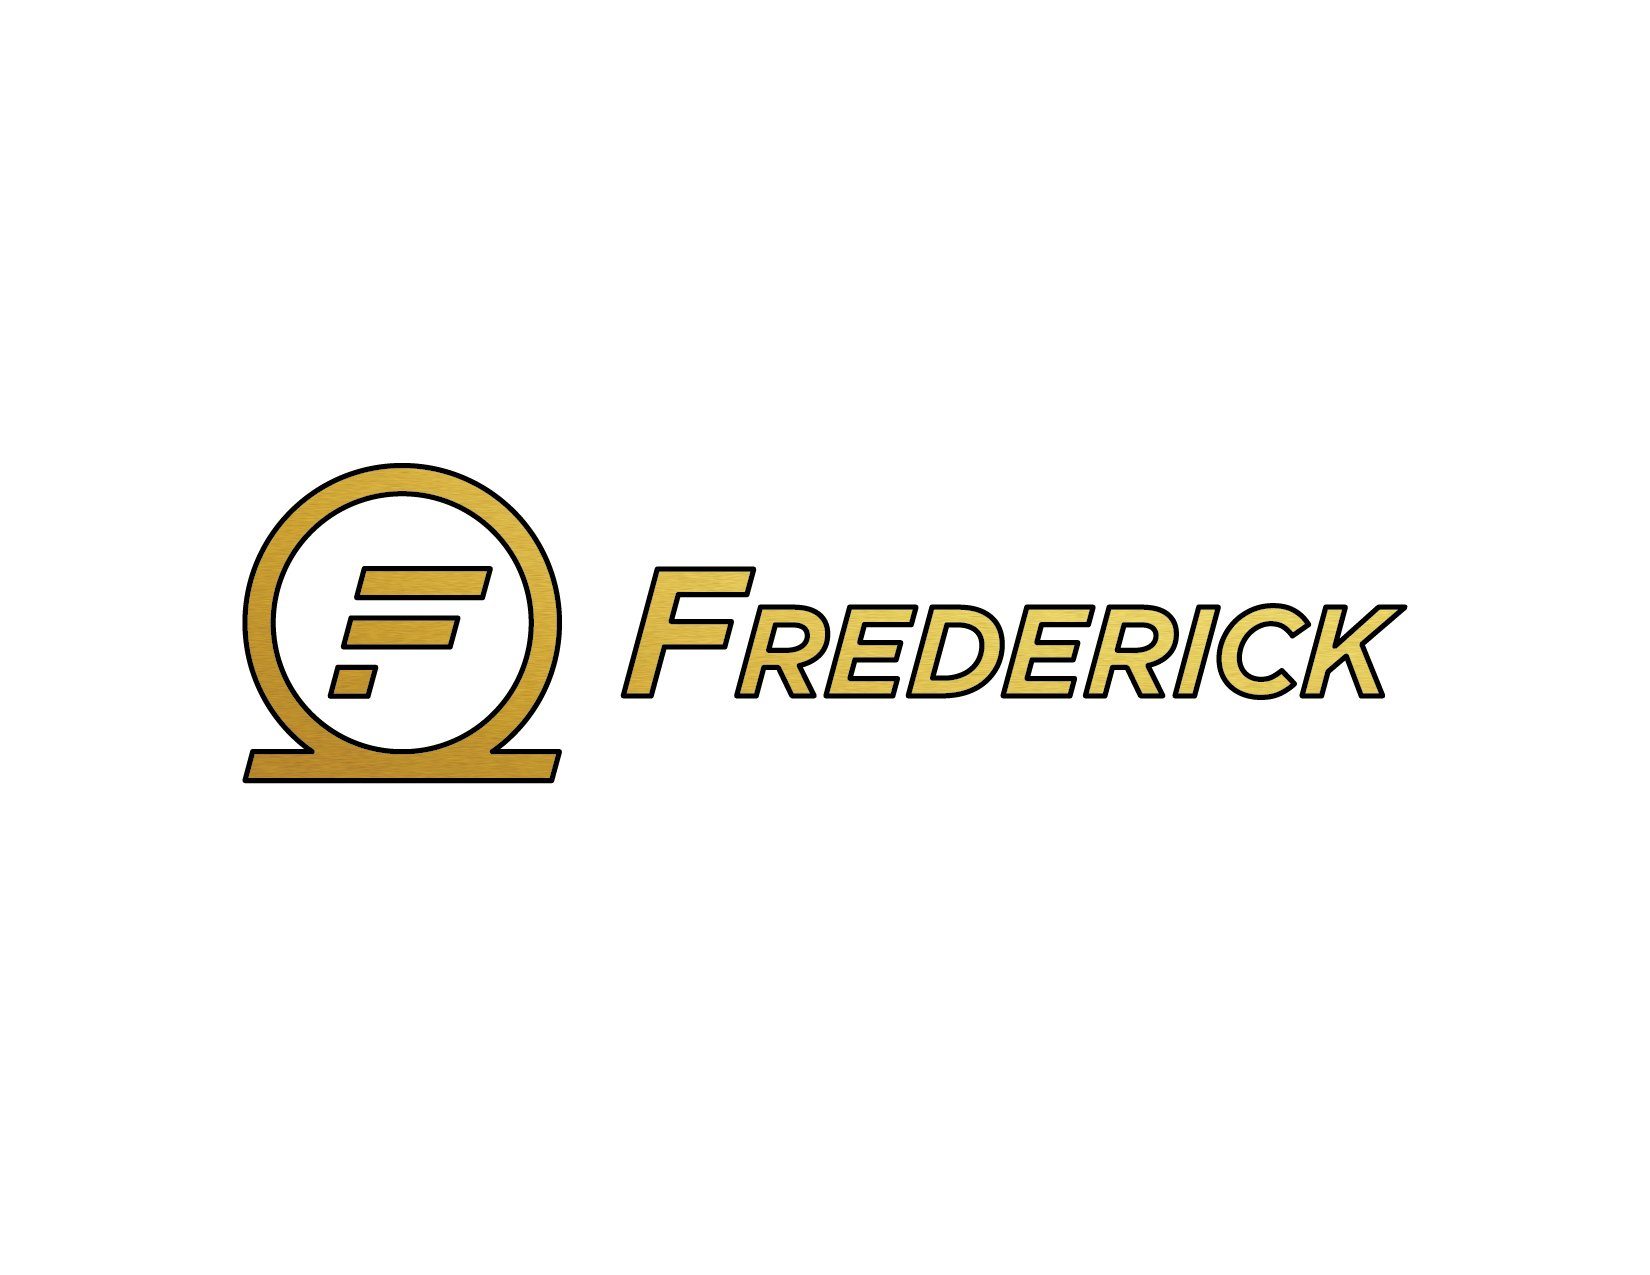 Frederick Guitars Logo And Branding Design By Glenford Laughton